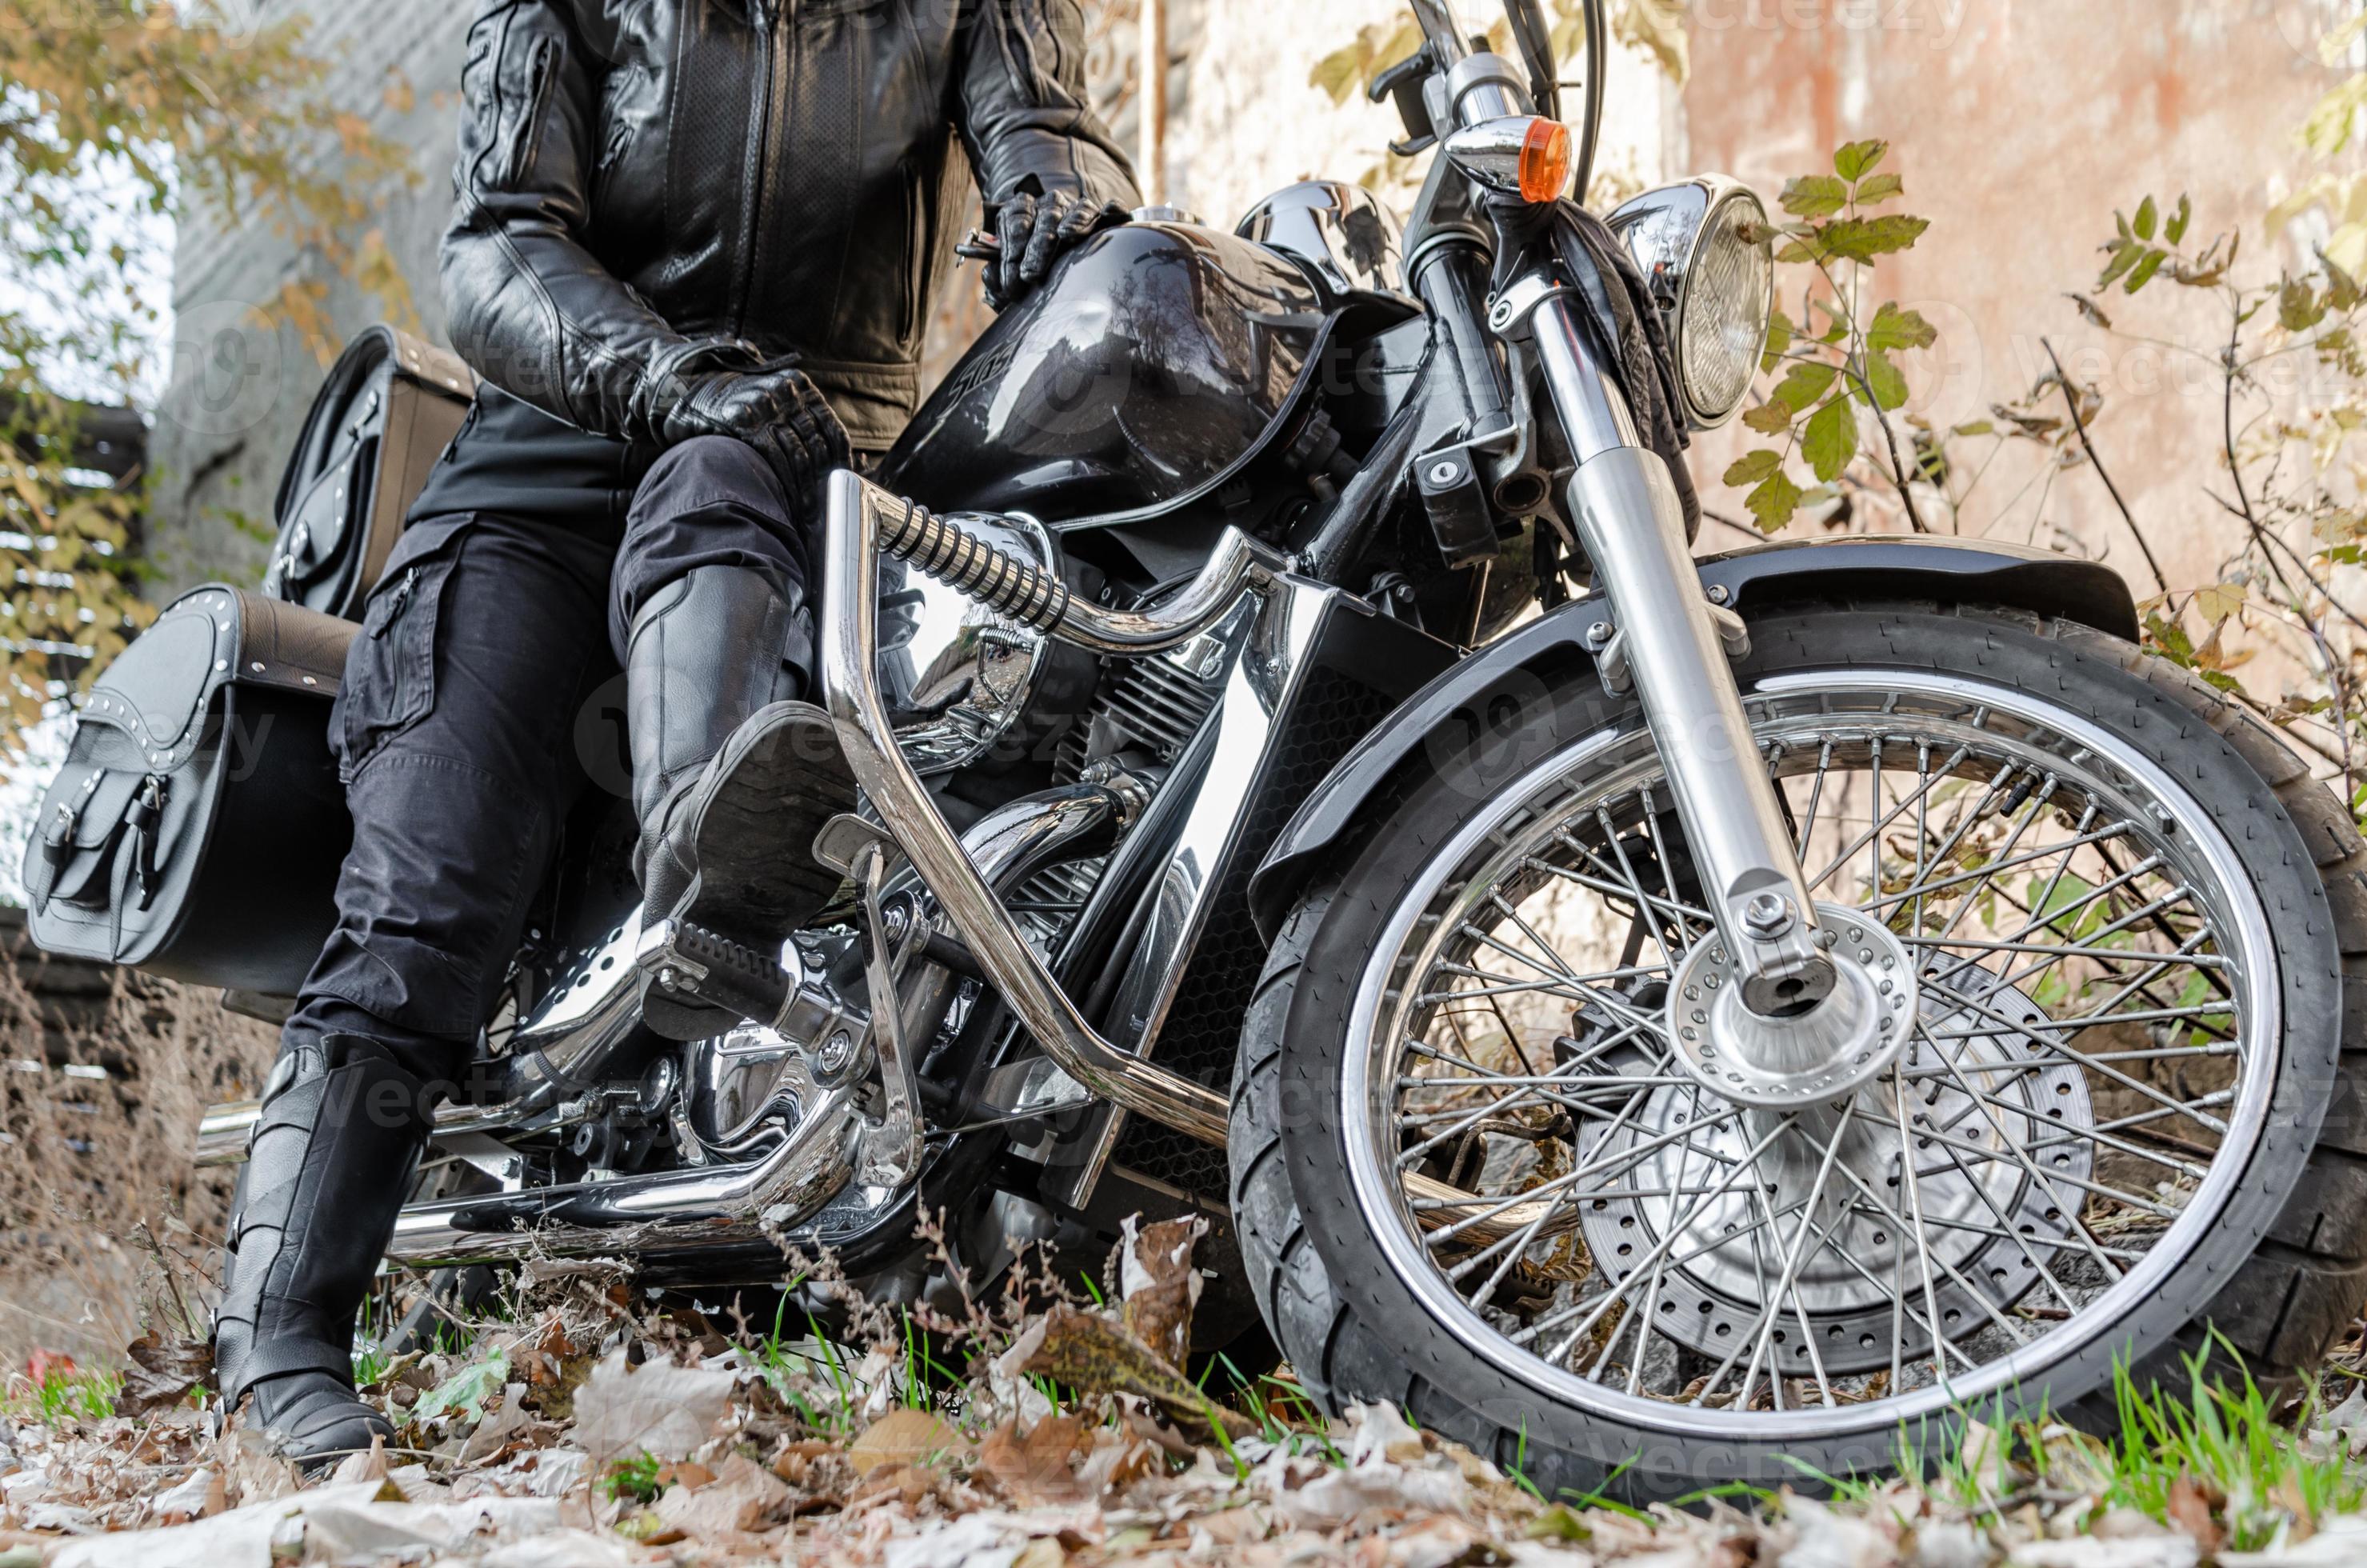 Chica en chaqueta de motociclista de cuero botas negras una motocicleta chopper 4426293 de stock en Vecteezy